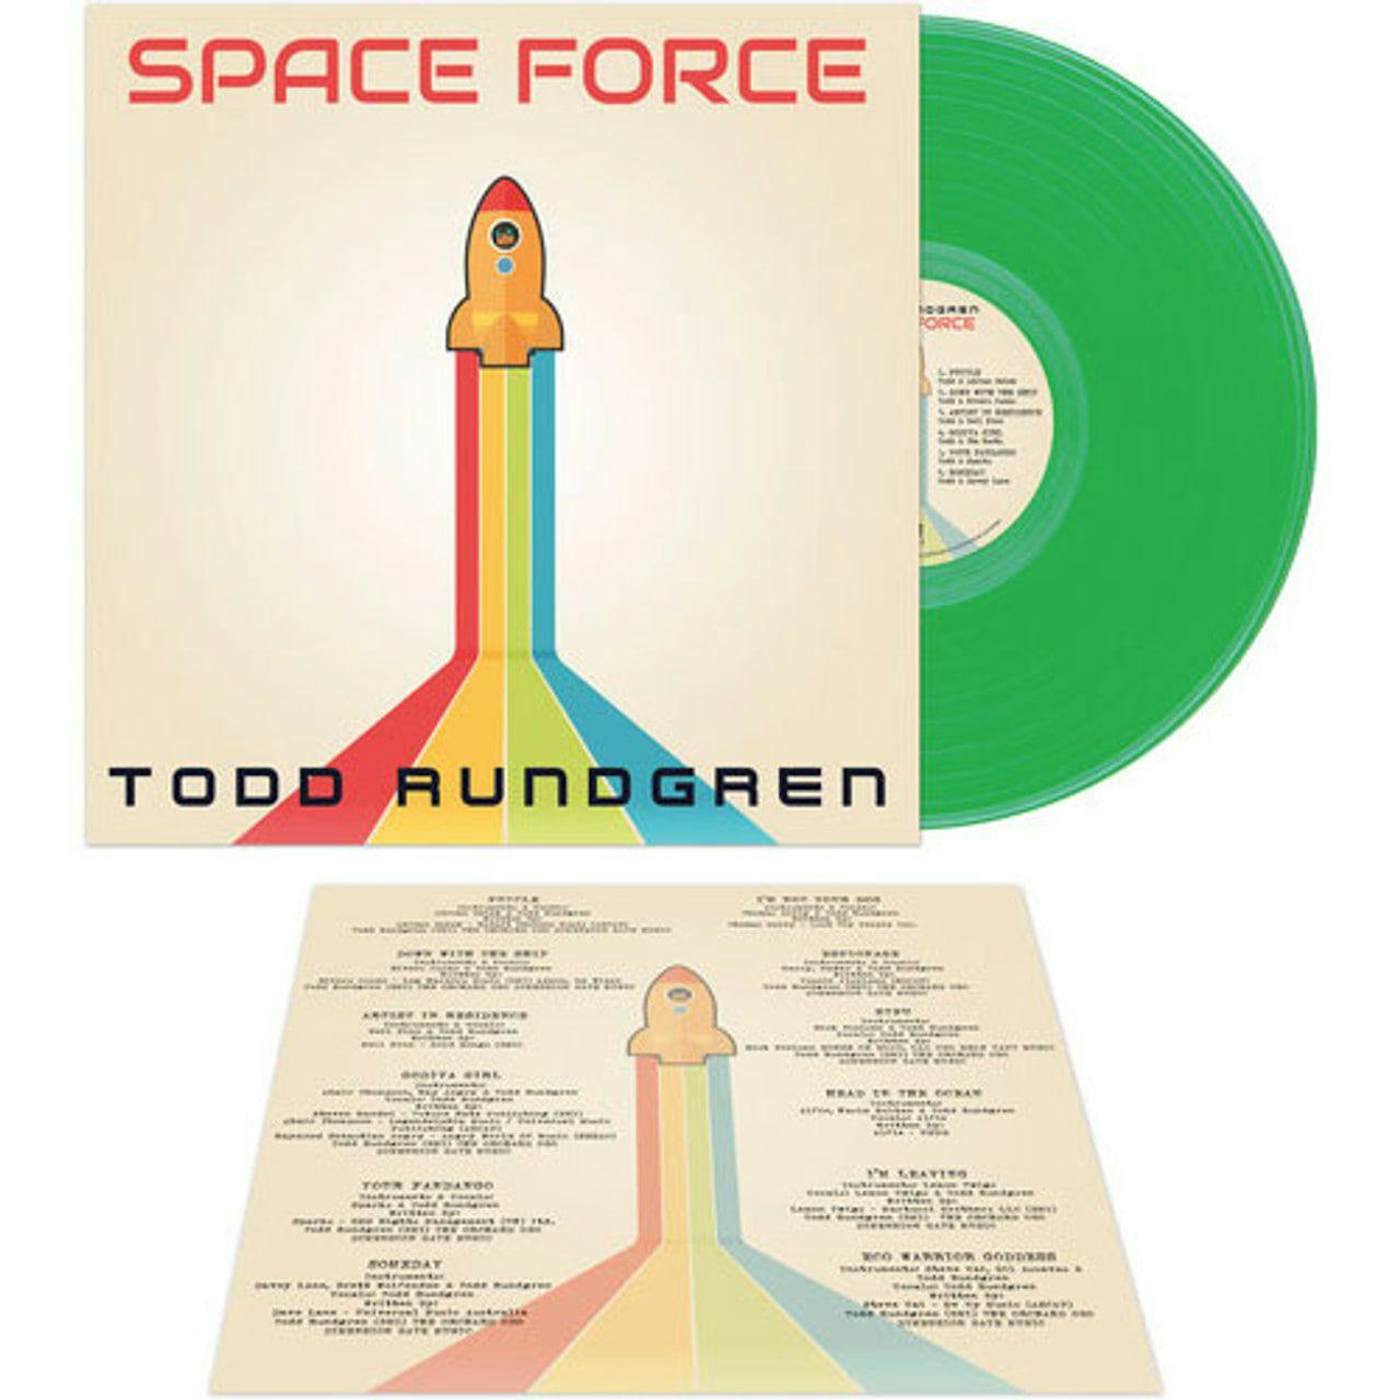 Todd Rundgren SPACE FORCE - GREEN Vinyl Record